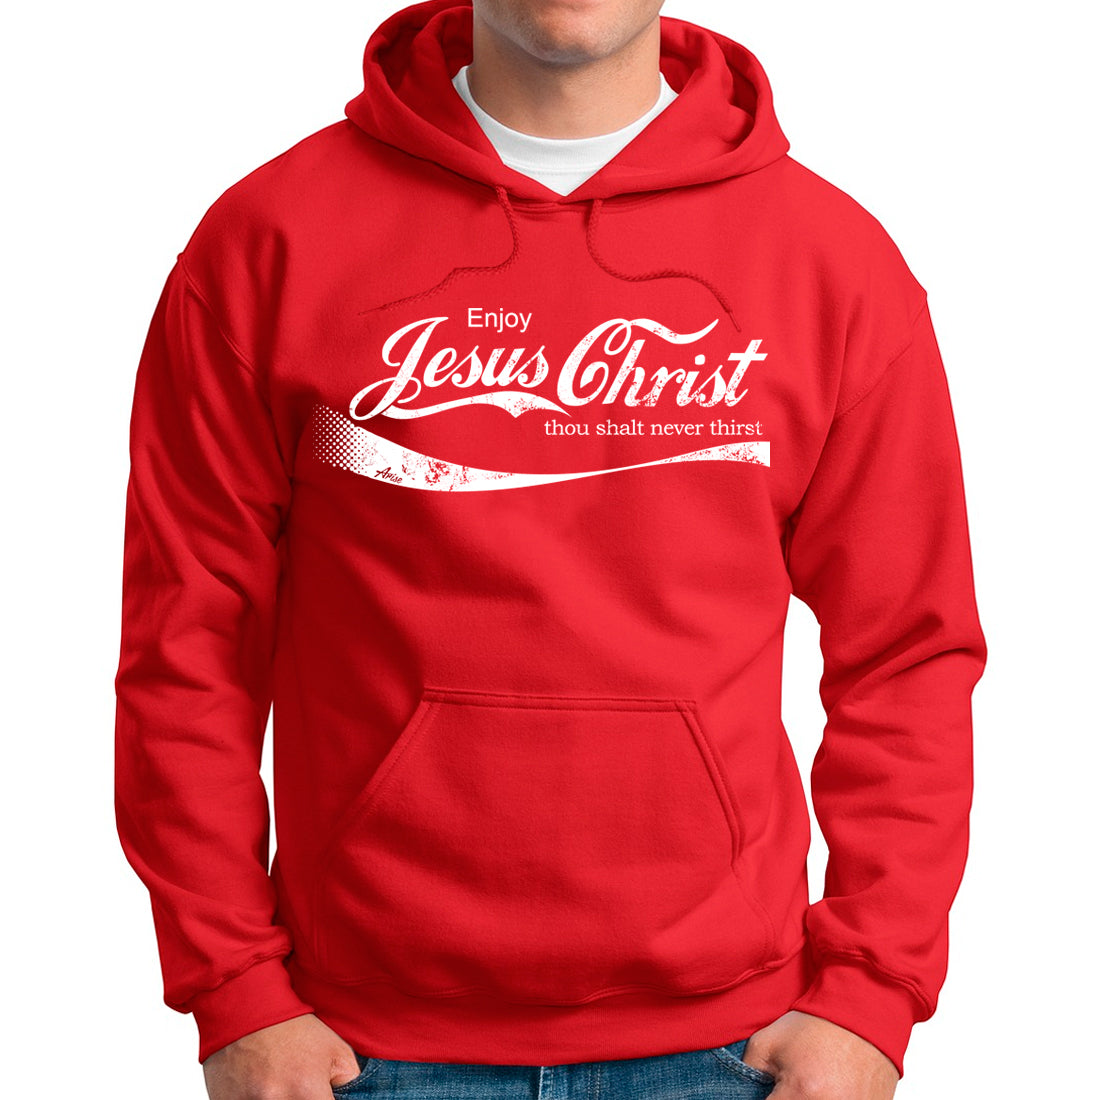 enjoy Jesus sweatshirt